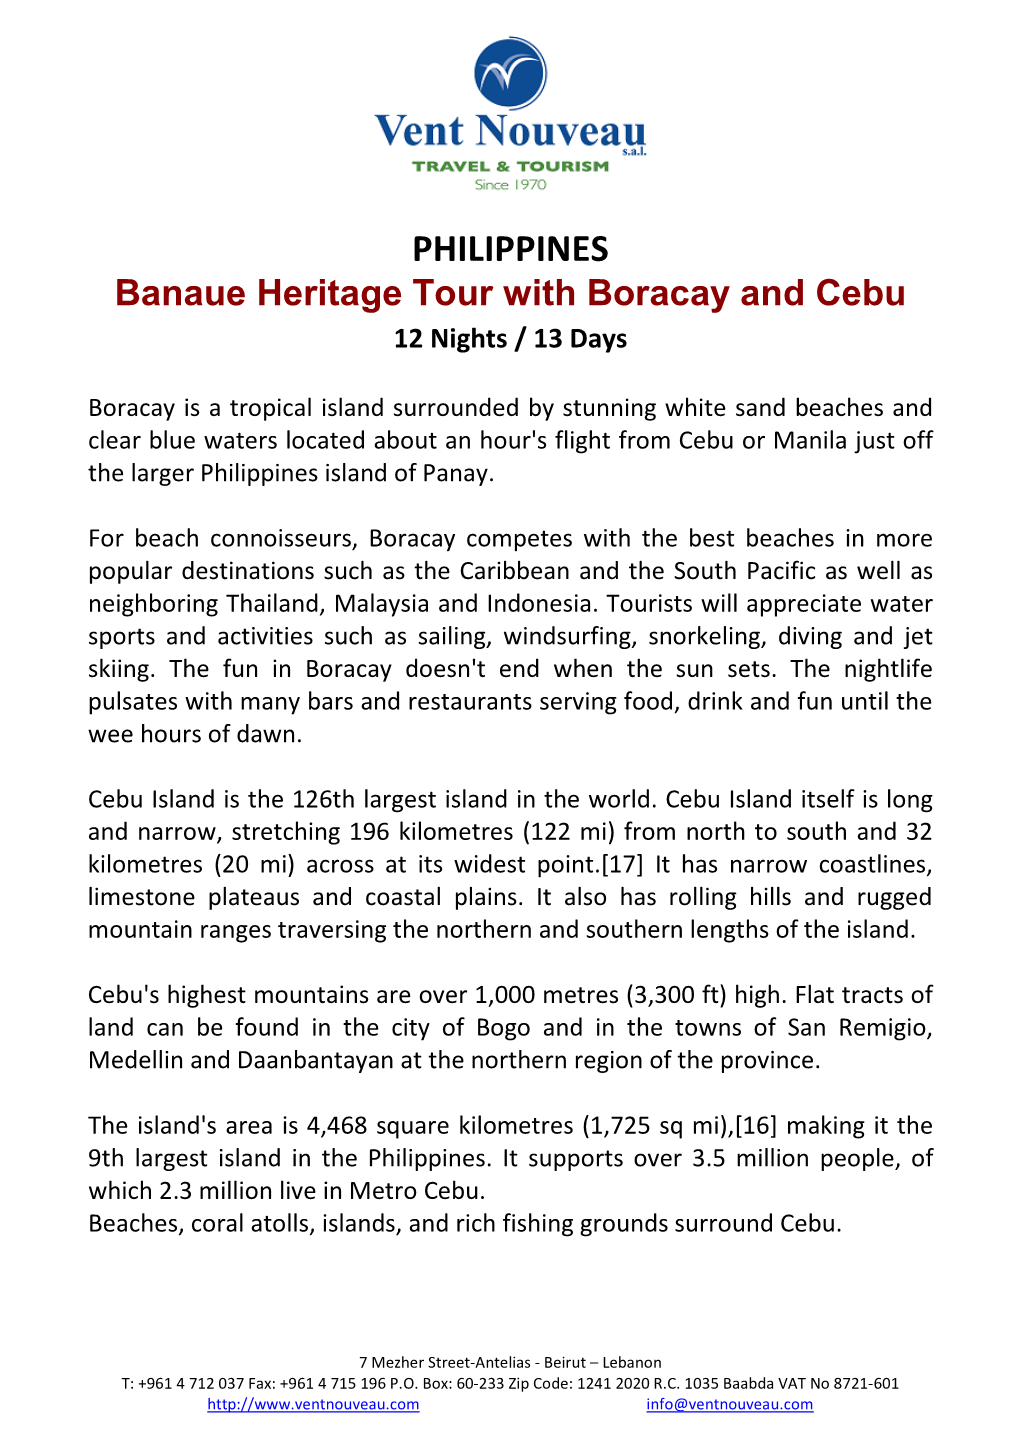 Banaue Heritage with Boracay & Cebu – 12N